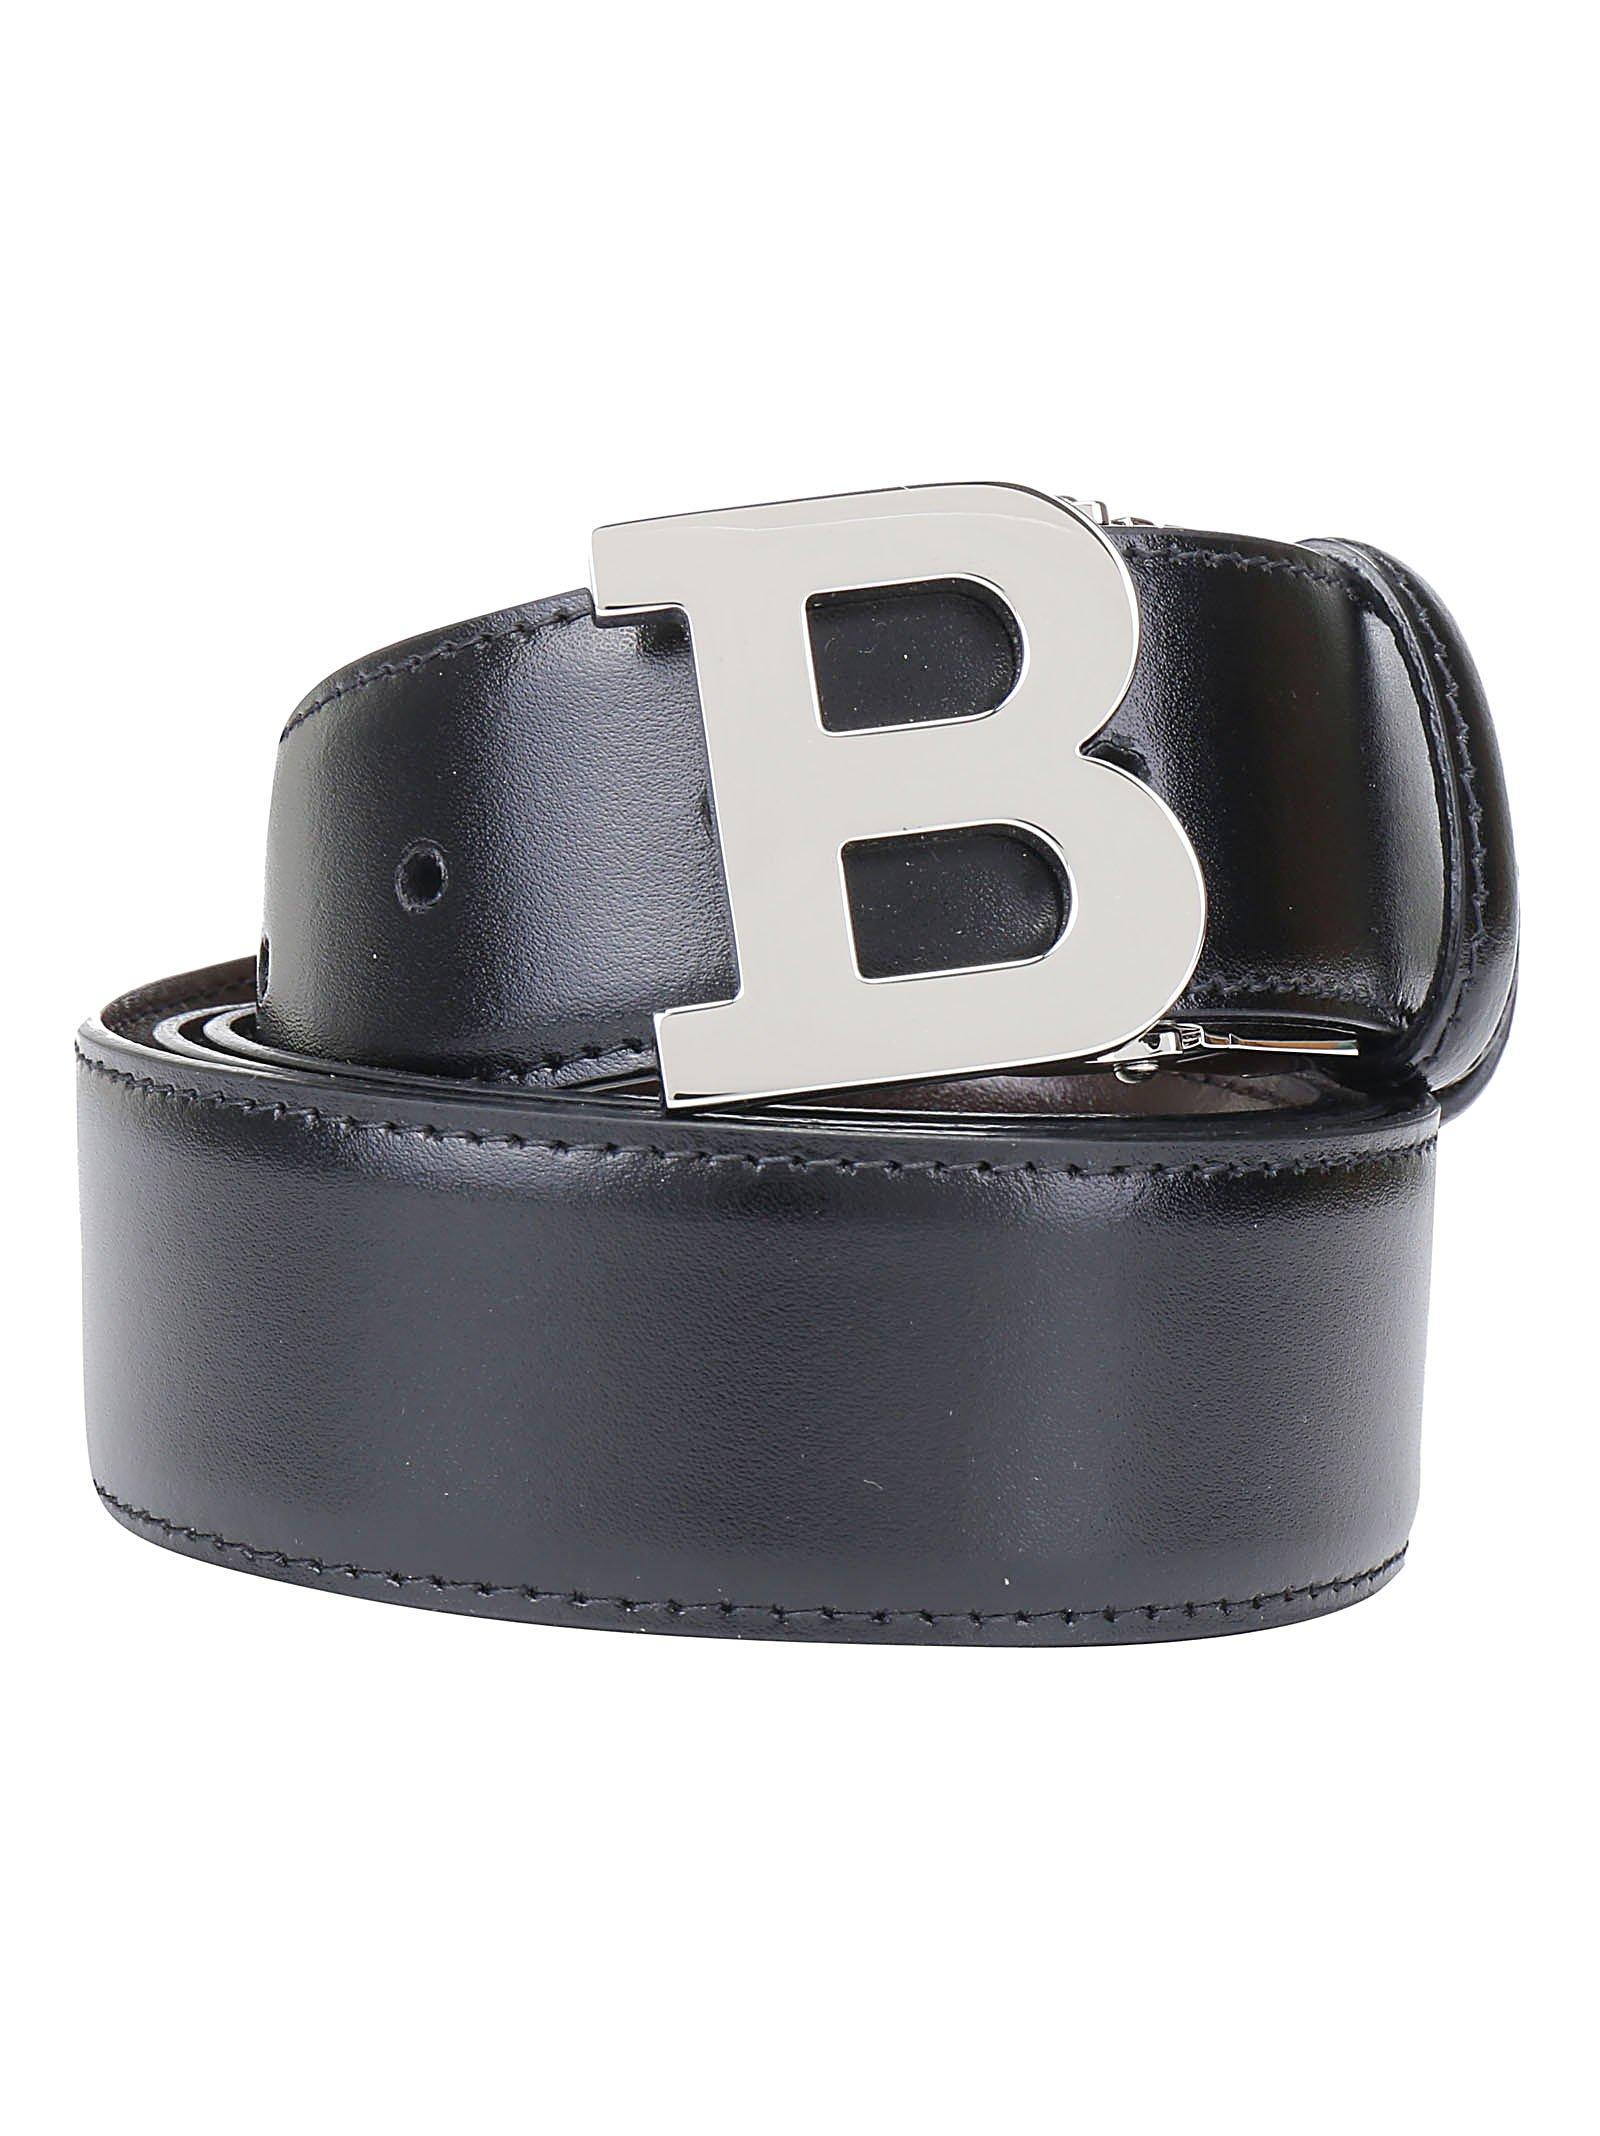 Bally Leather Logo Buckle Belt in Black for Men - Lyst